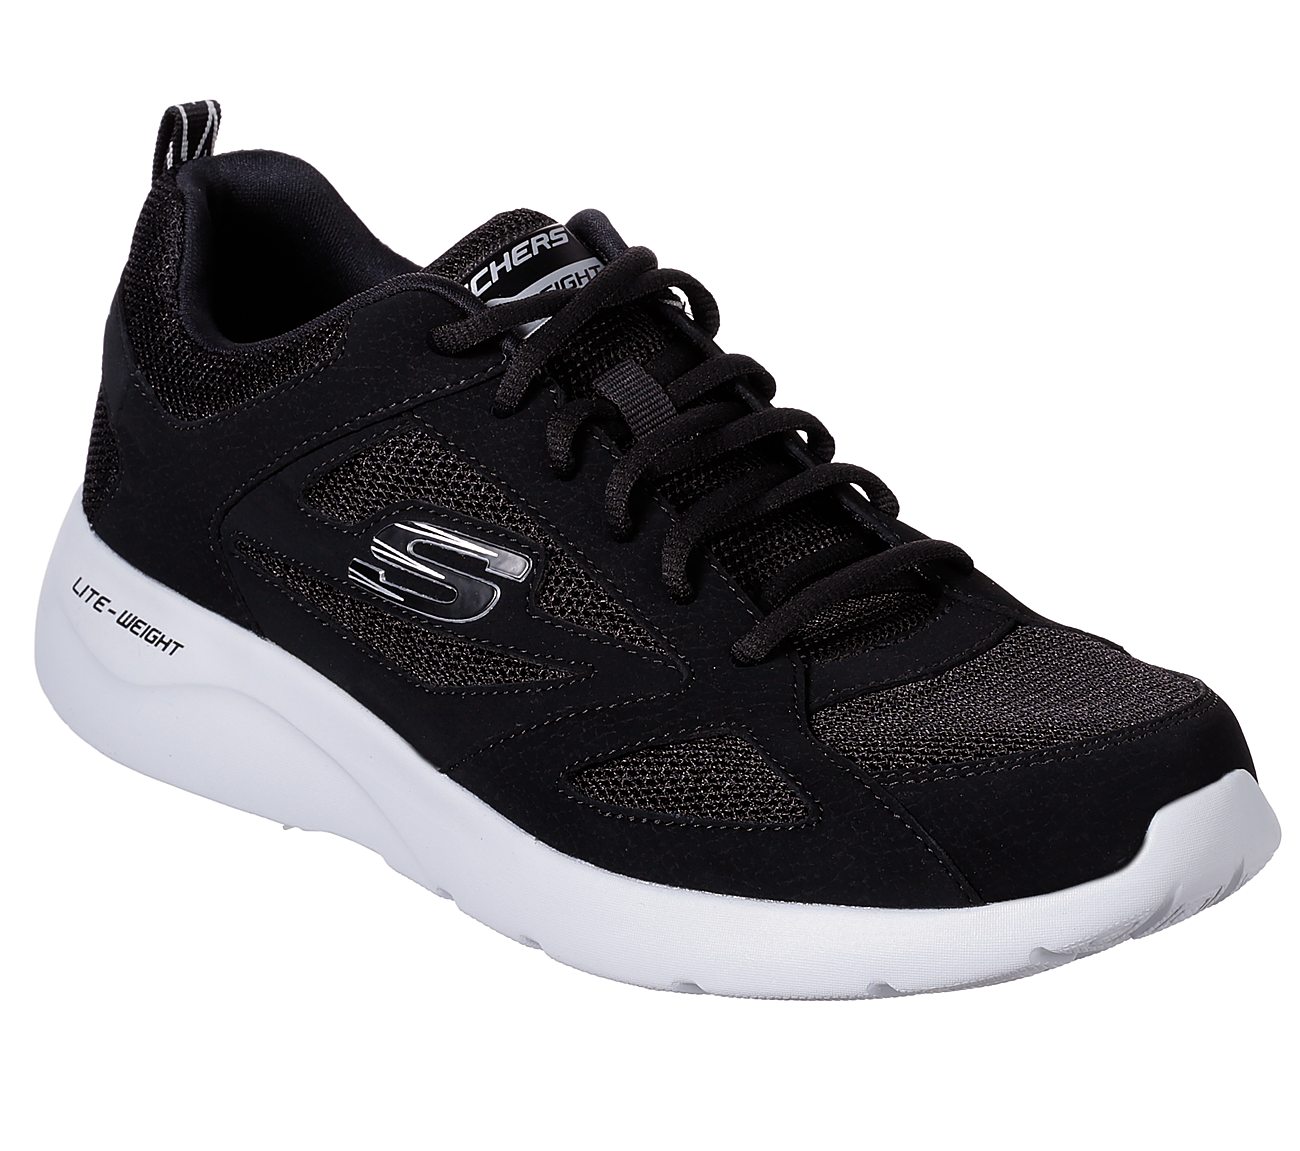 SKEAJ|#Skechers Herren Dynamight 2.0-fallford Sneaker, (Black Leather/Mesh/Pu/Trim Blk), 42 EU